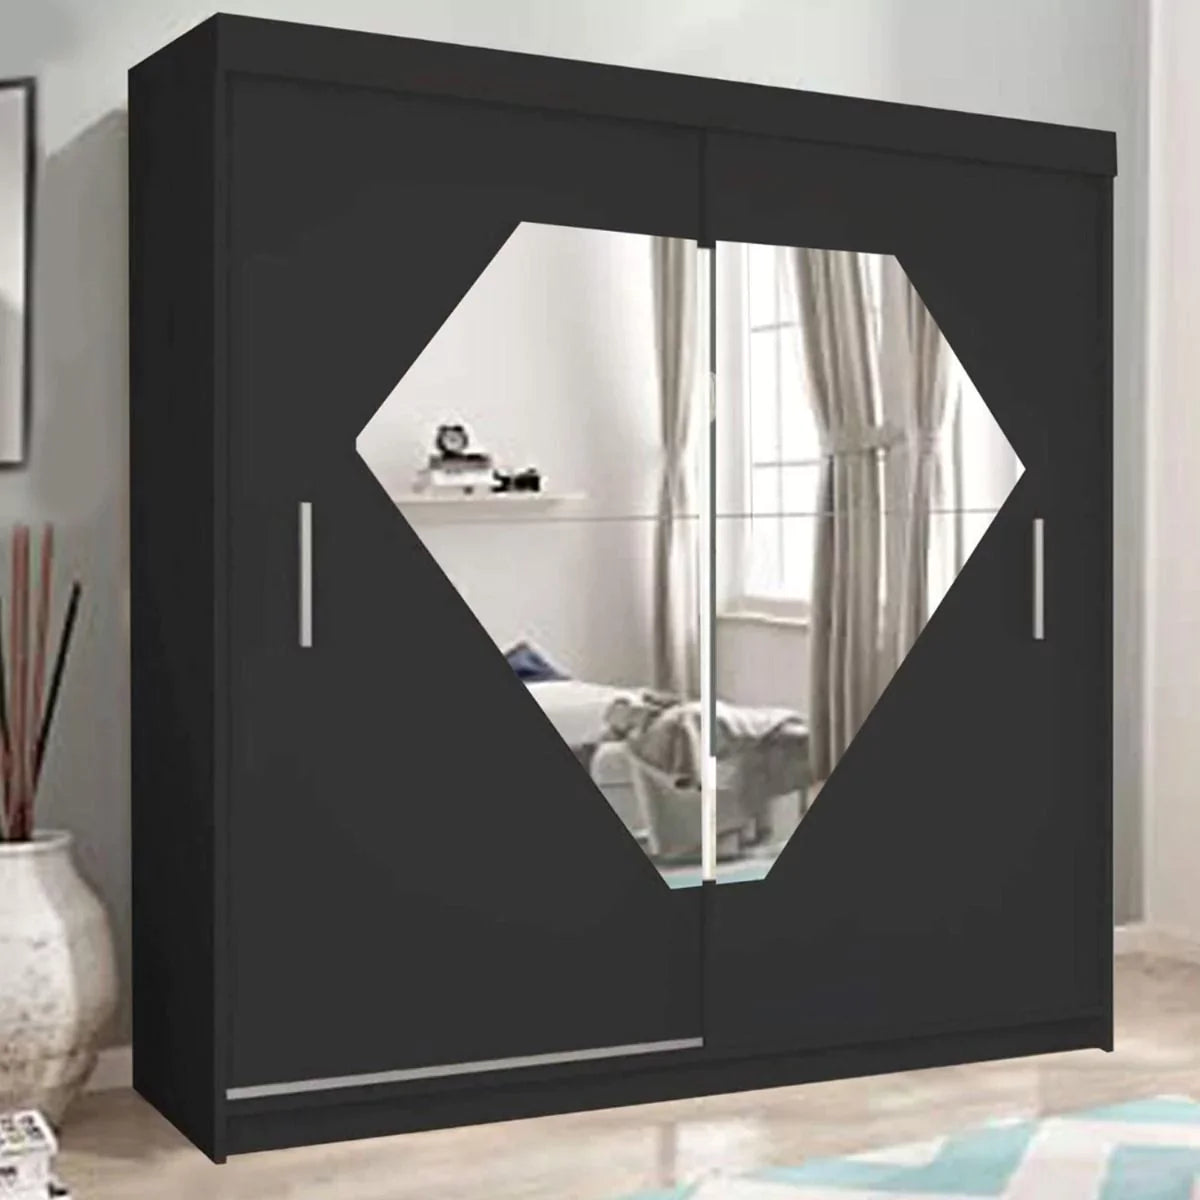 Diamond Sliding Door Wardrobe - Black, Grey, White - 150cm and 203cm